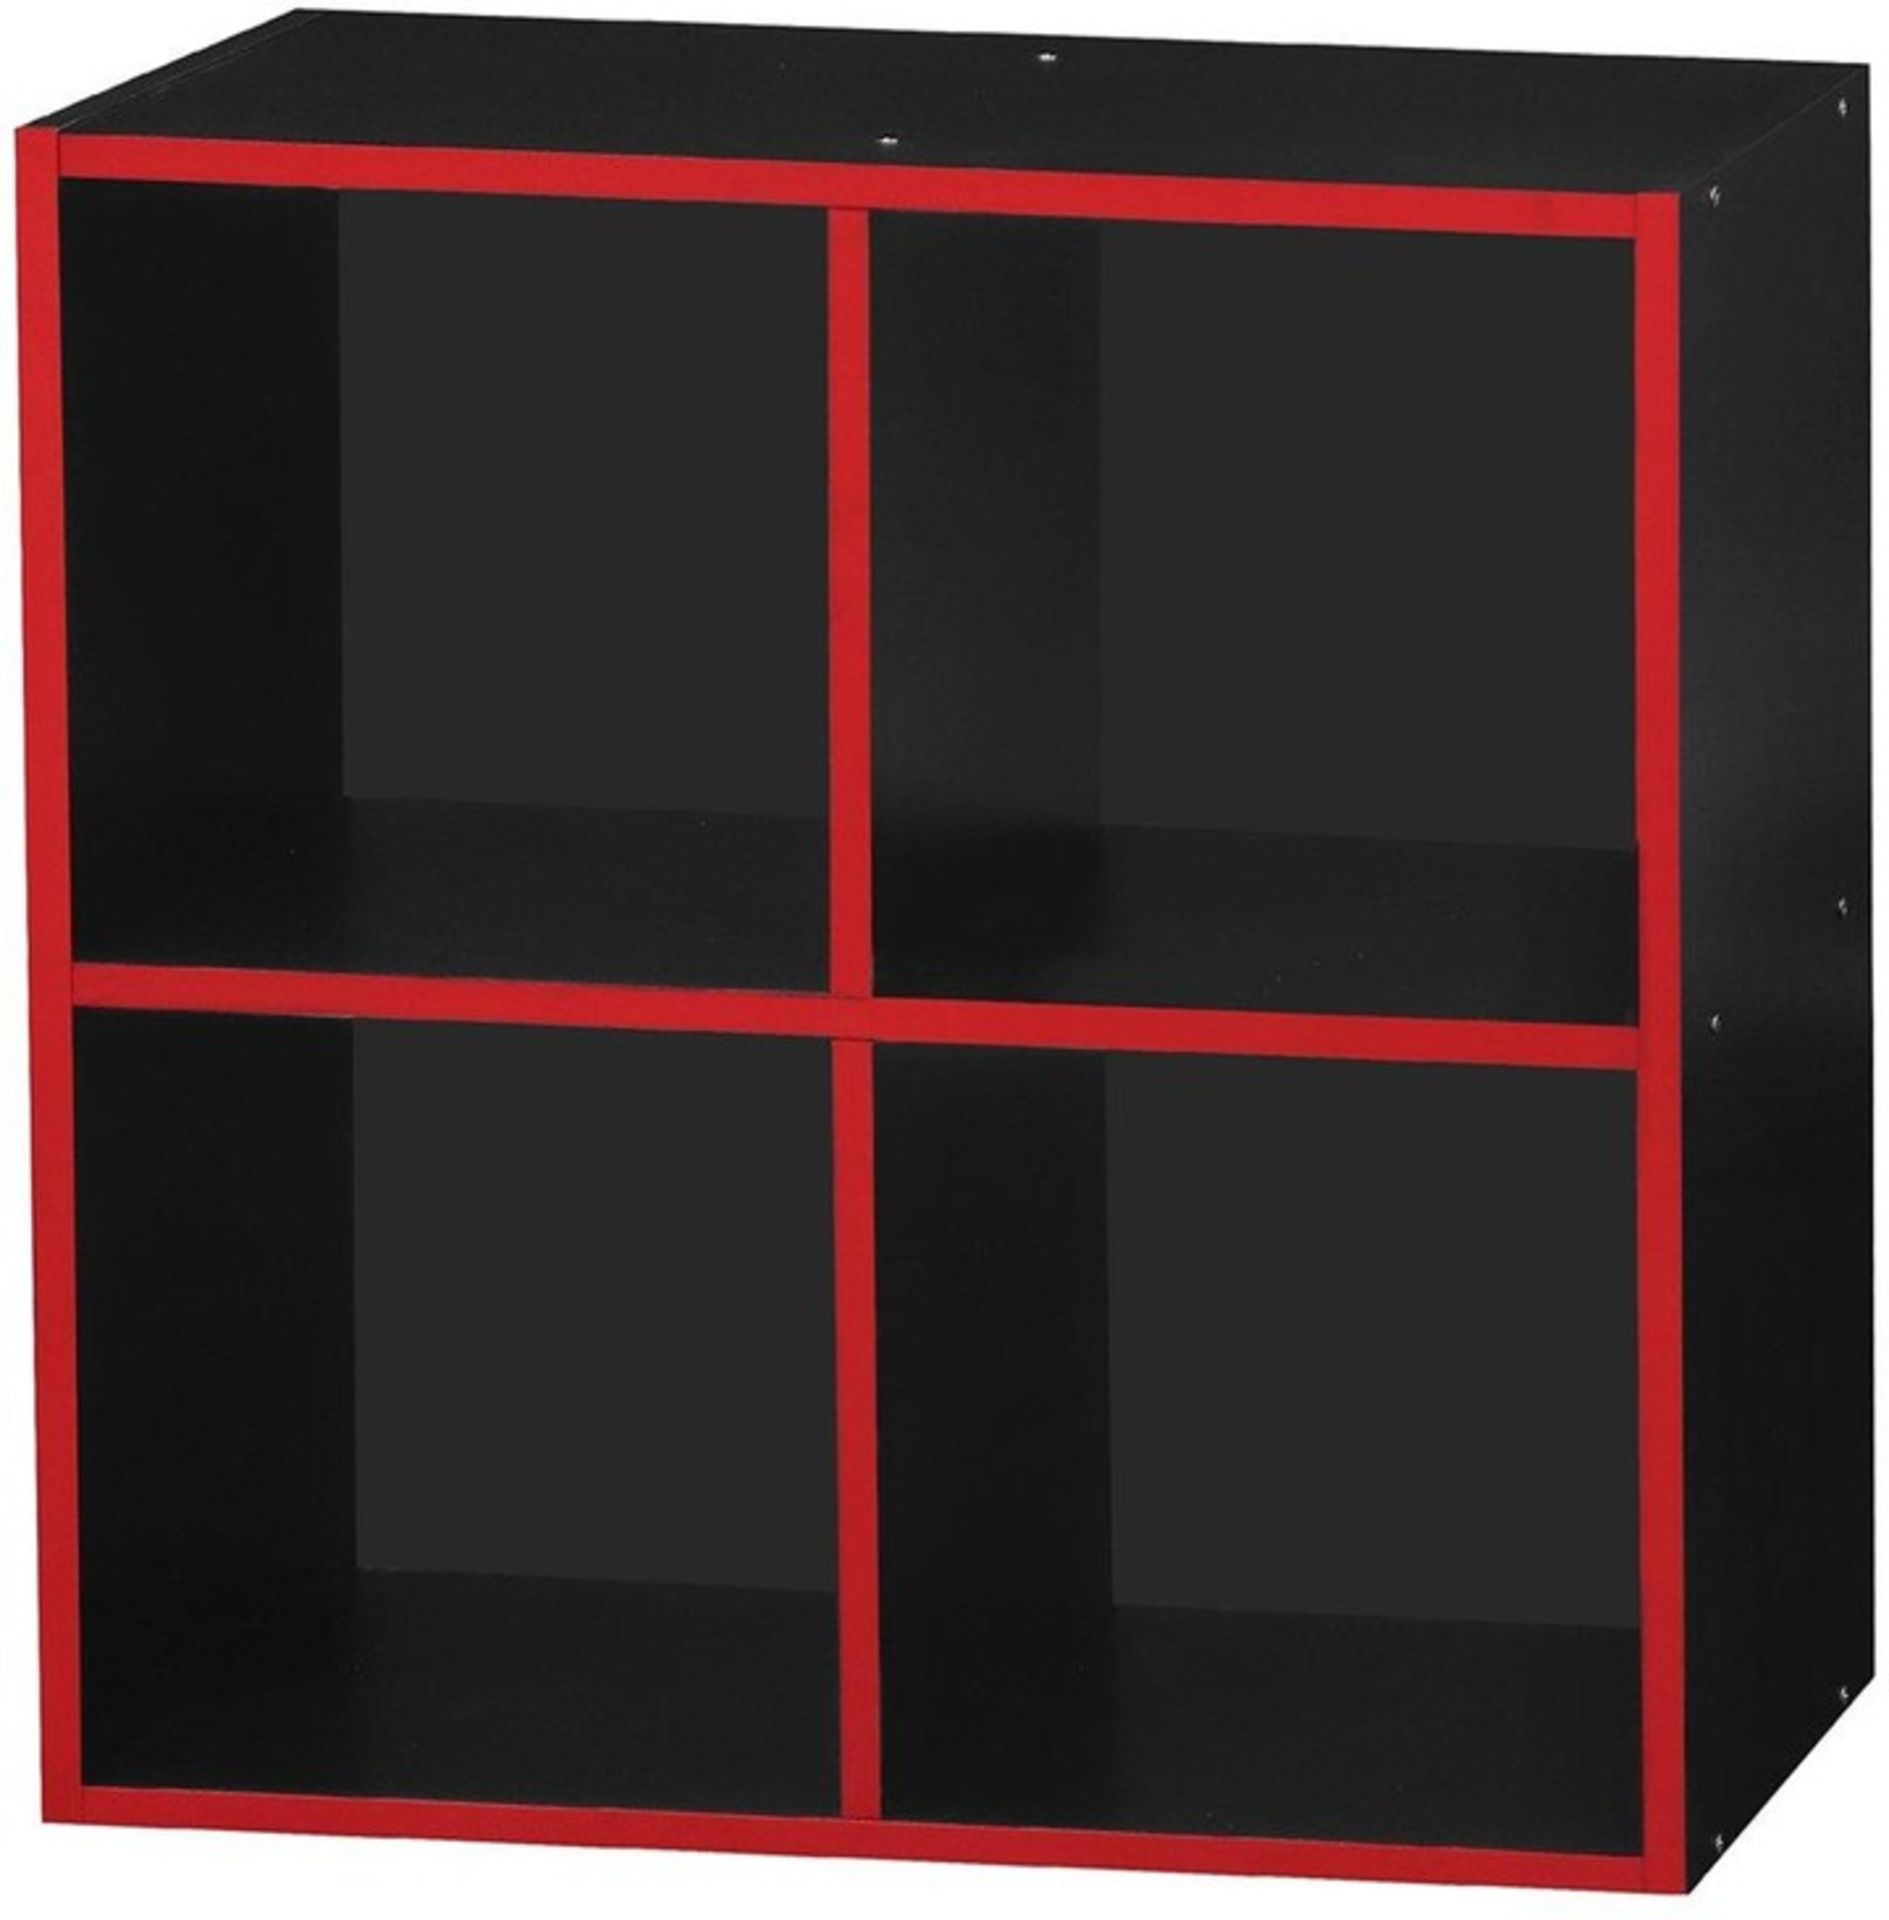 Lloyd Pascal Virtuosa 4 Cube Storage unit in Black & Red.RRP £55